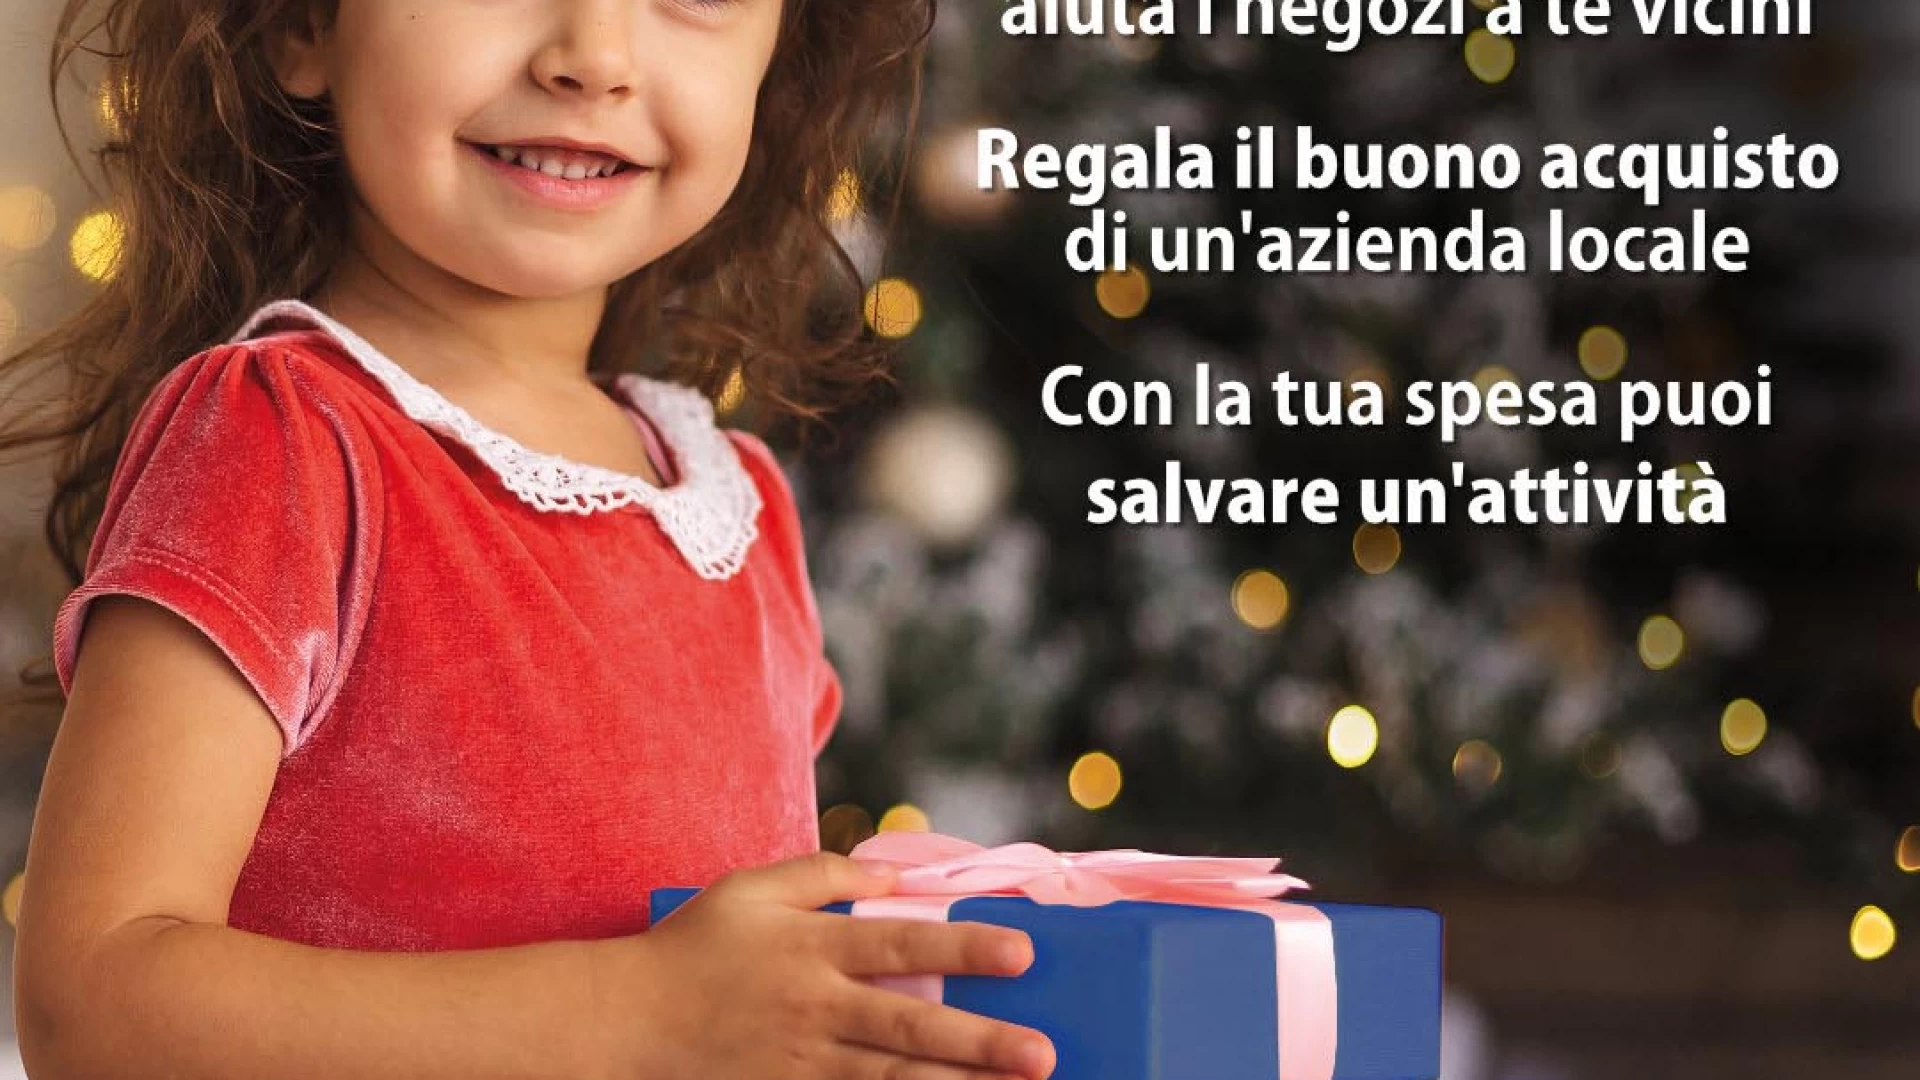 Confcommercio Molise: a Natale compra dalle imprese molisane.